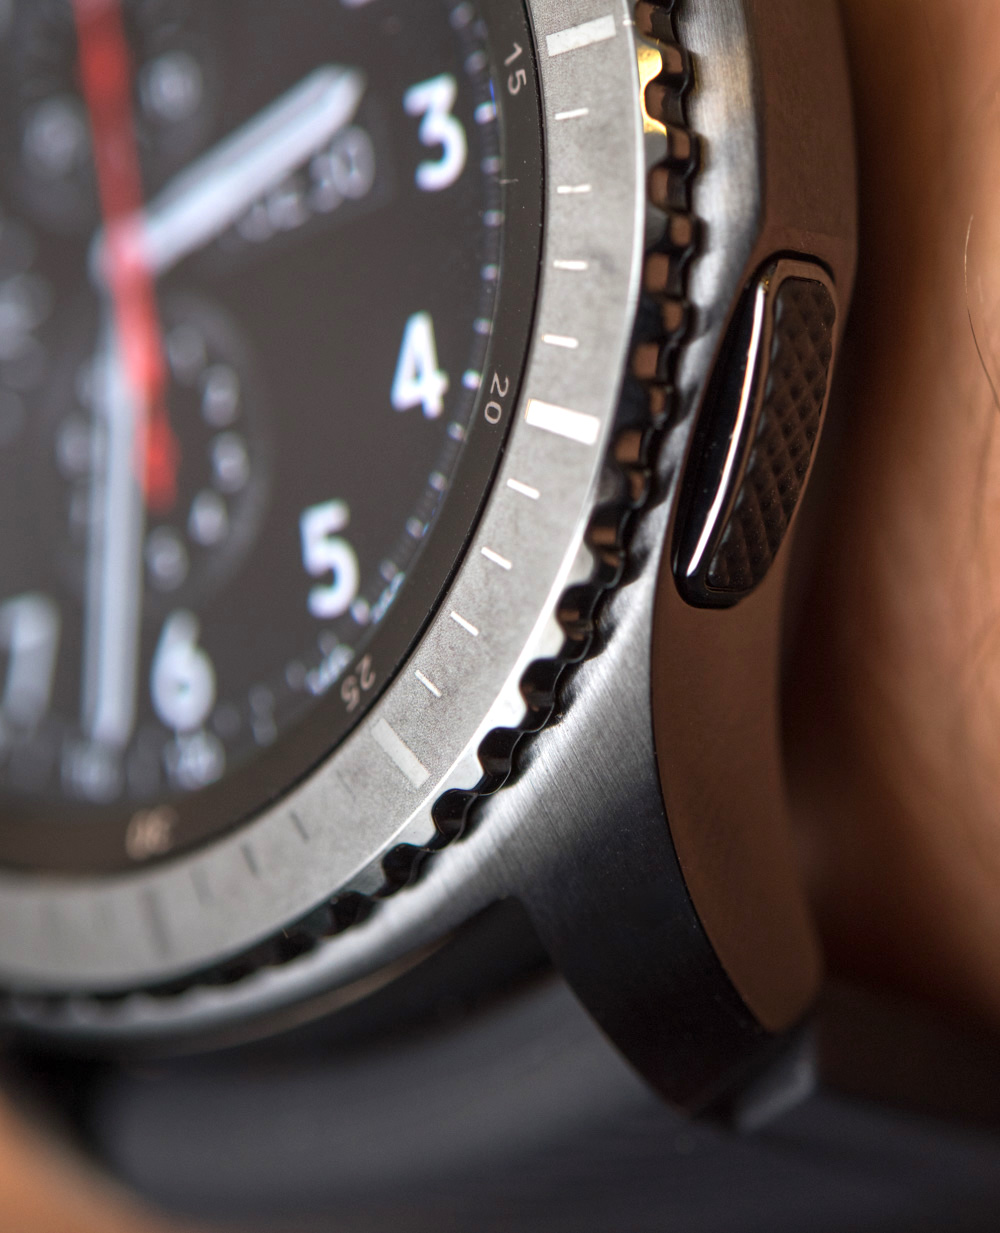 Samsung-Gear-S3-Frontier-Classic-smartwatch-review-aBlogtoWatch-17